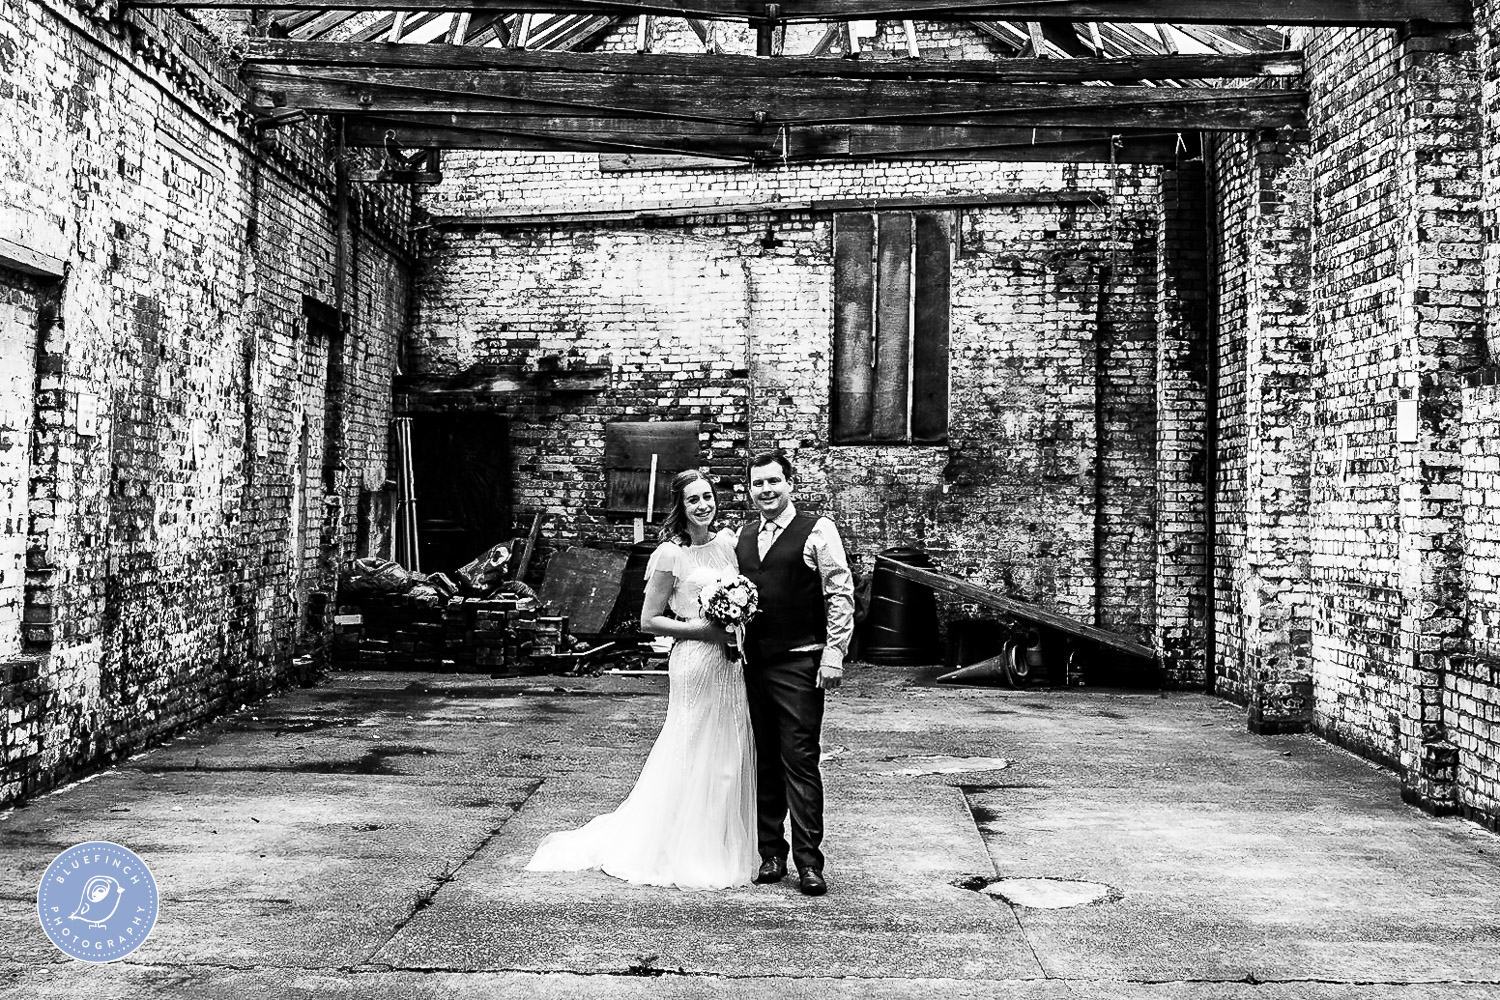 Daniel & Georgina’s Wedding Photography At The Bond Digbeth